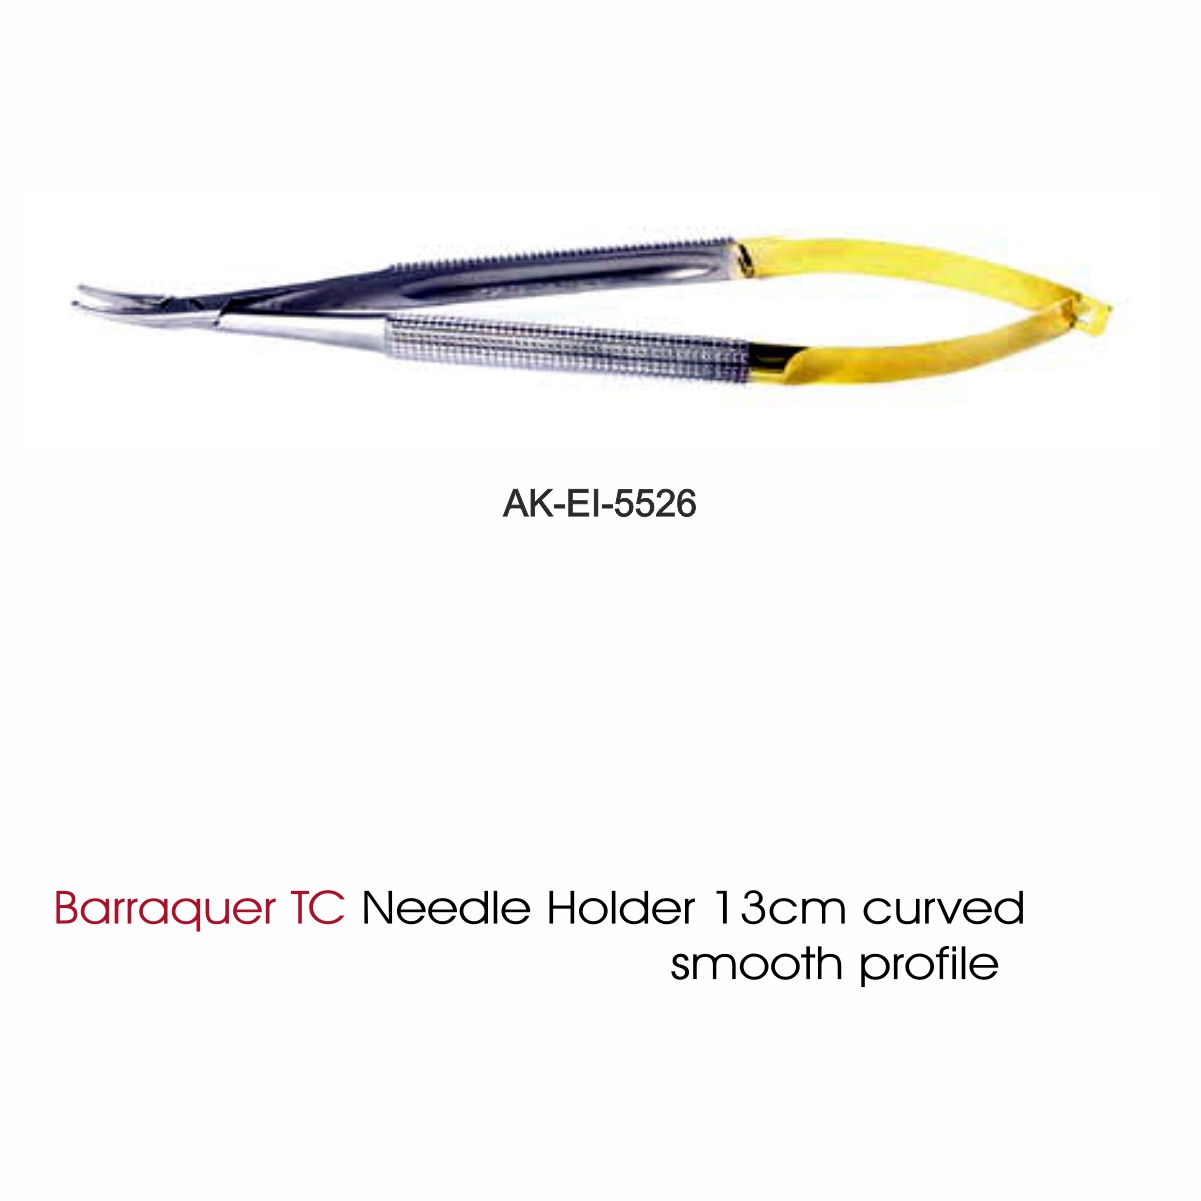 Barraquer TC Needle Holder